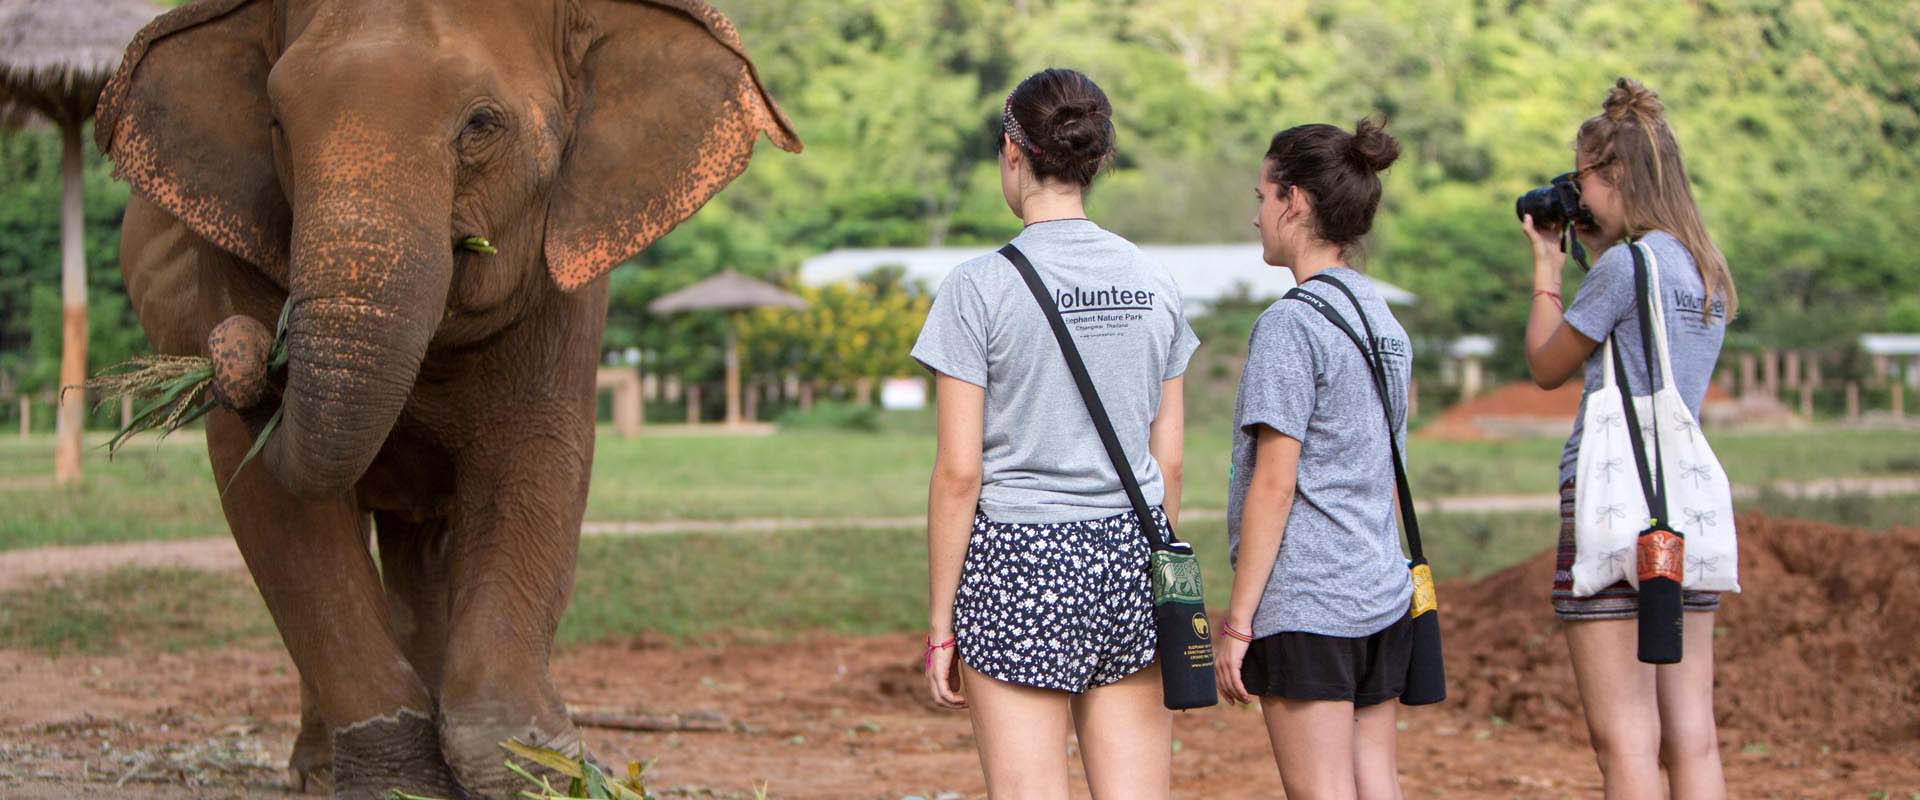 Elephant Nature Park Vollunteer